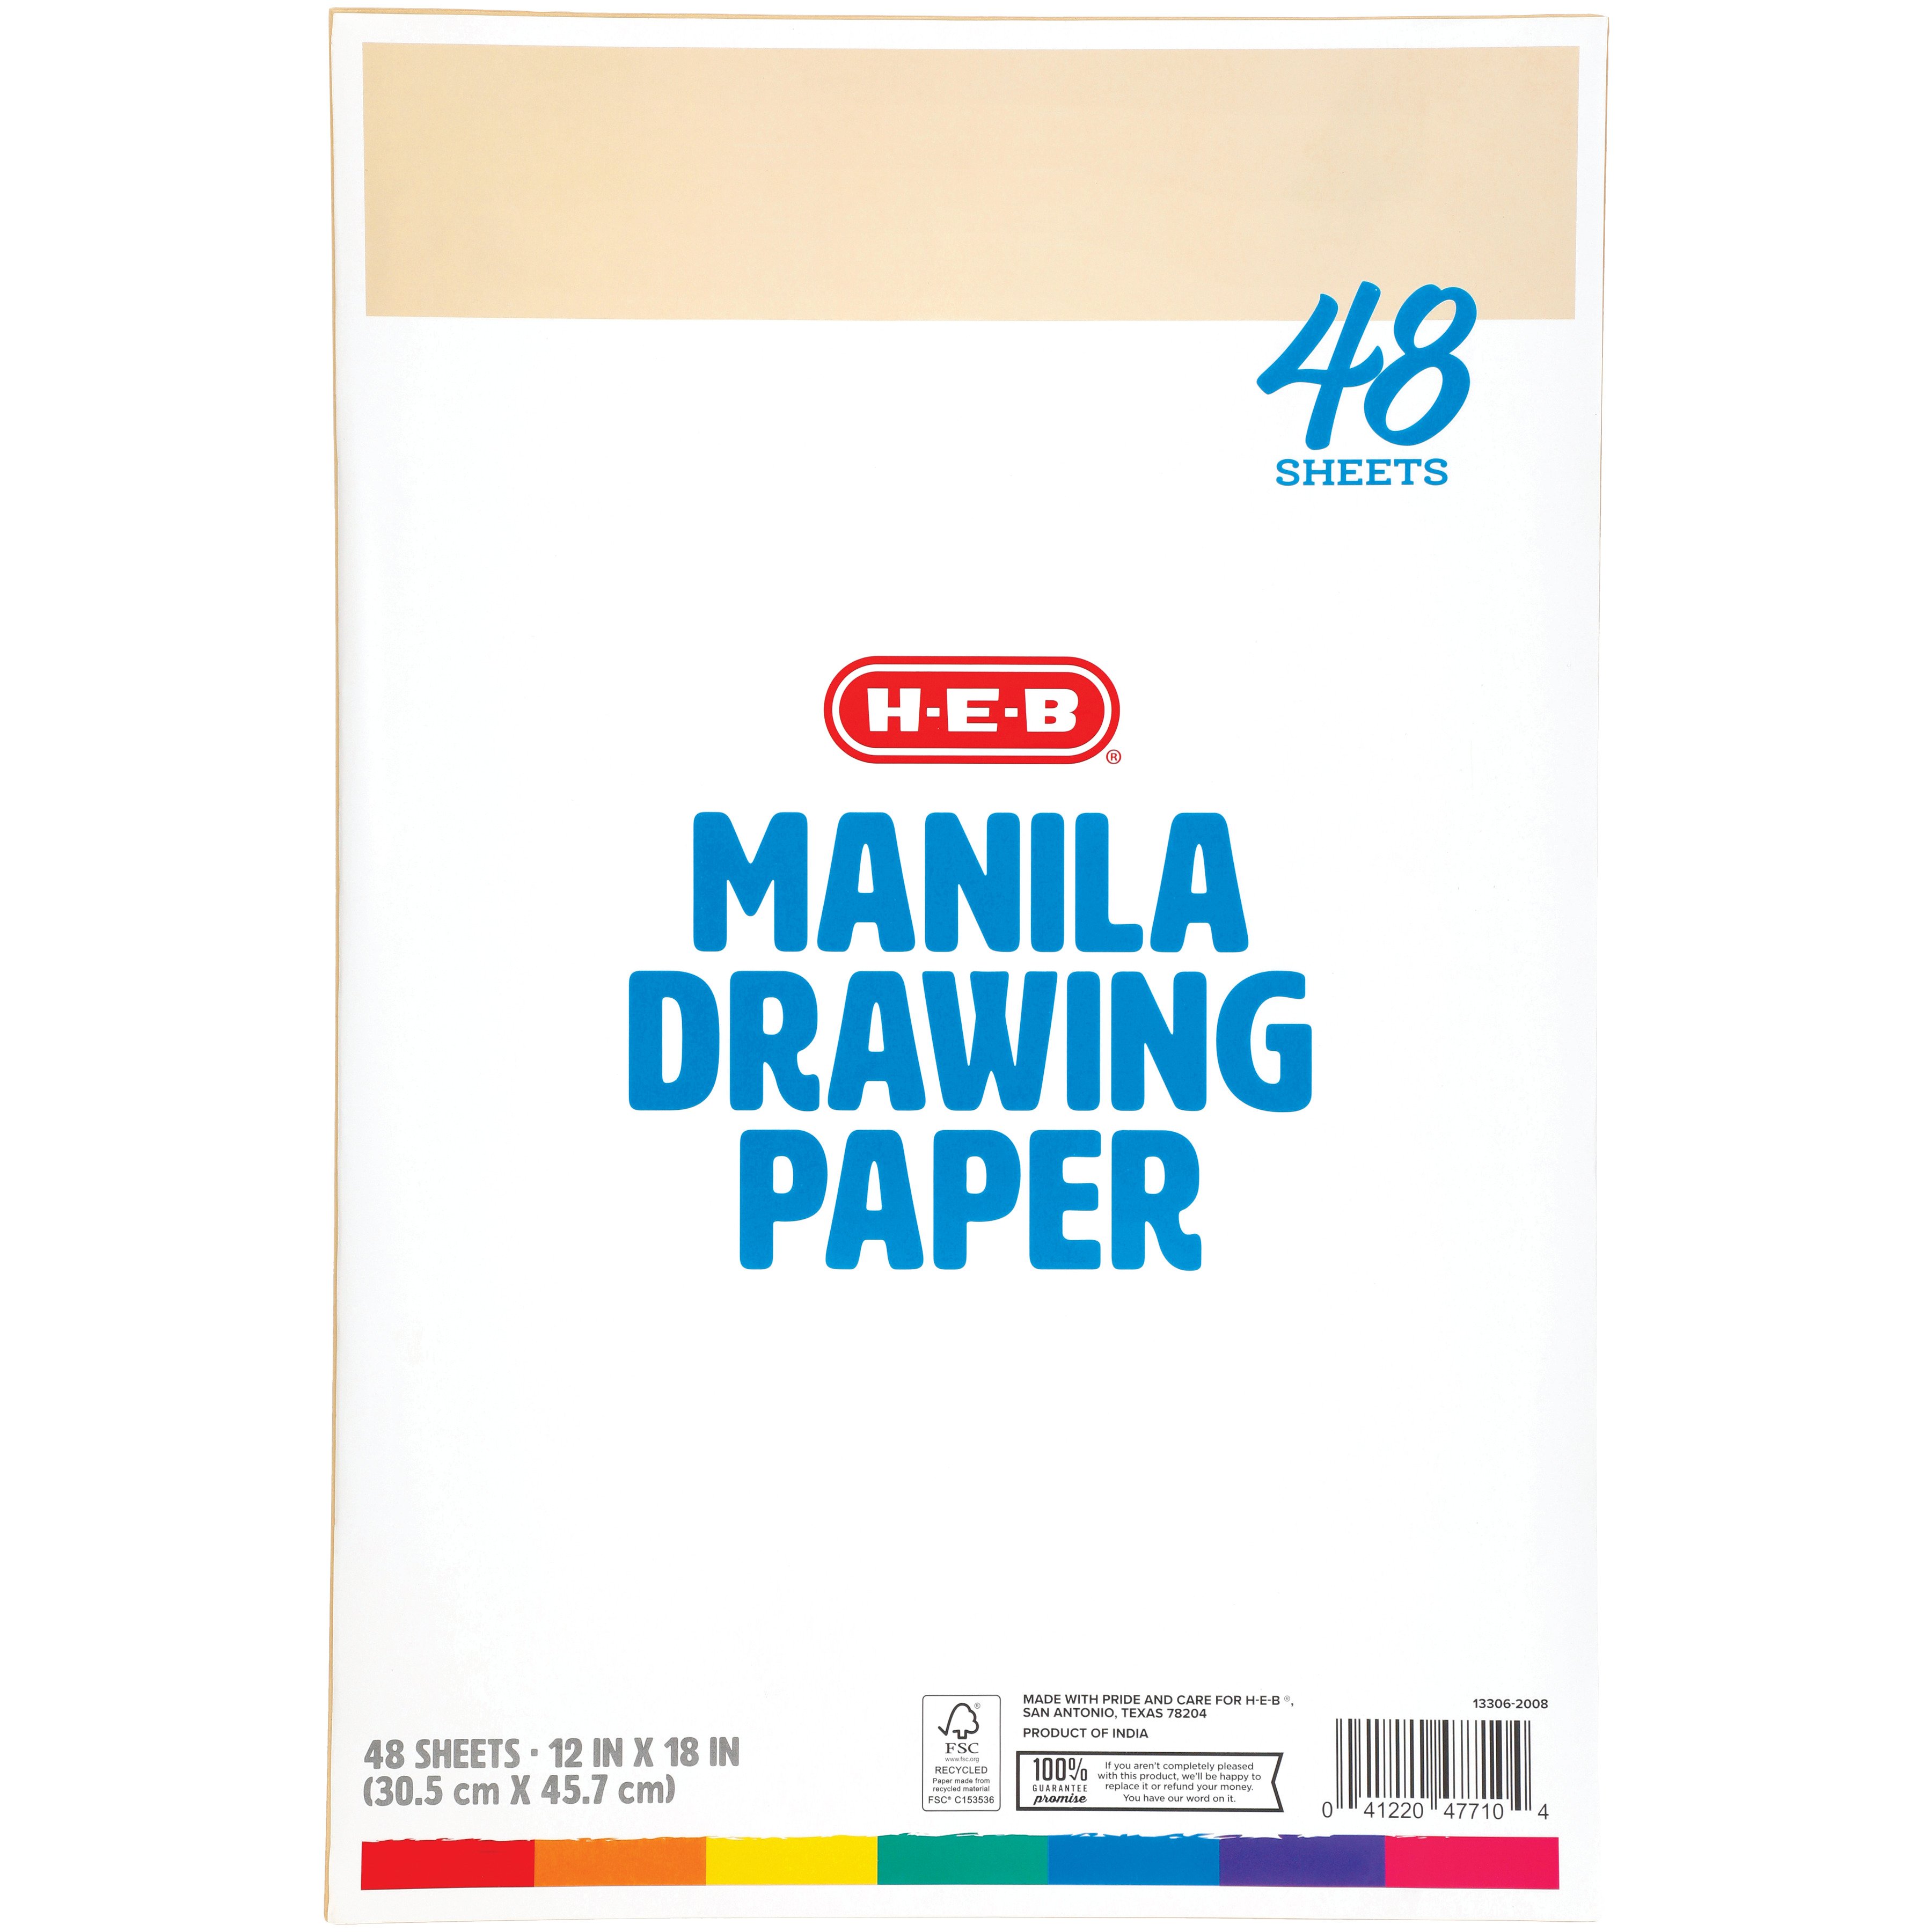 H-E-B Manila Drawing Paper